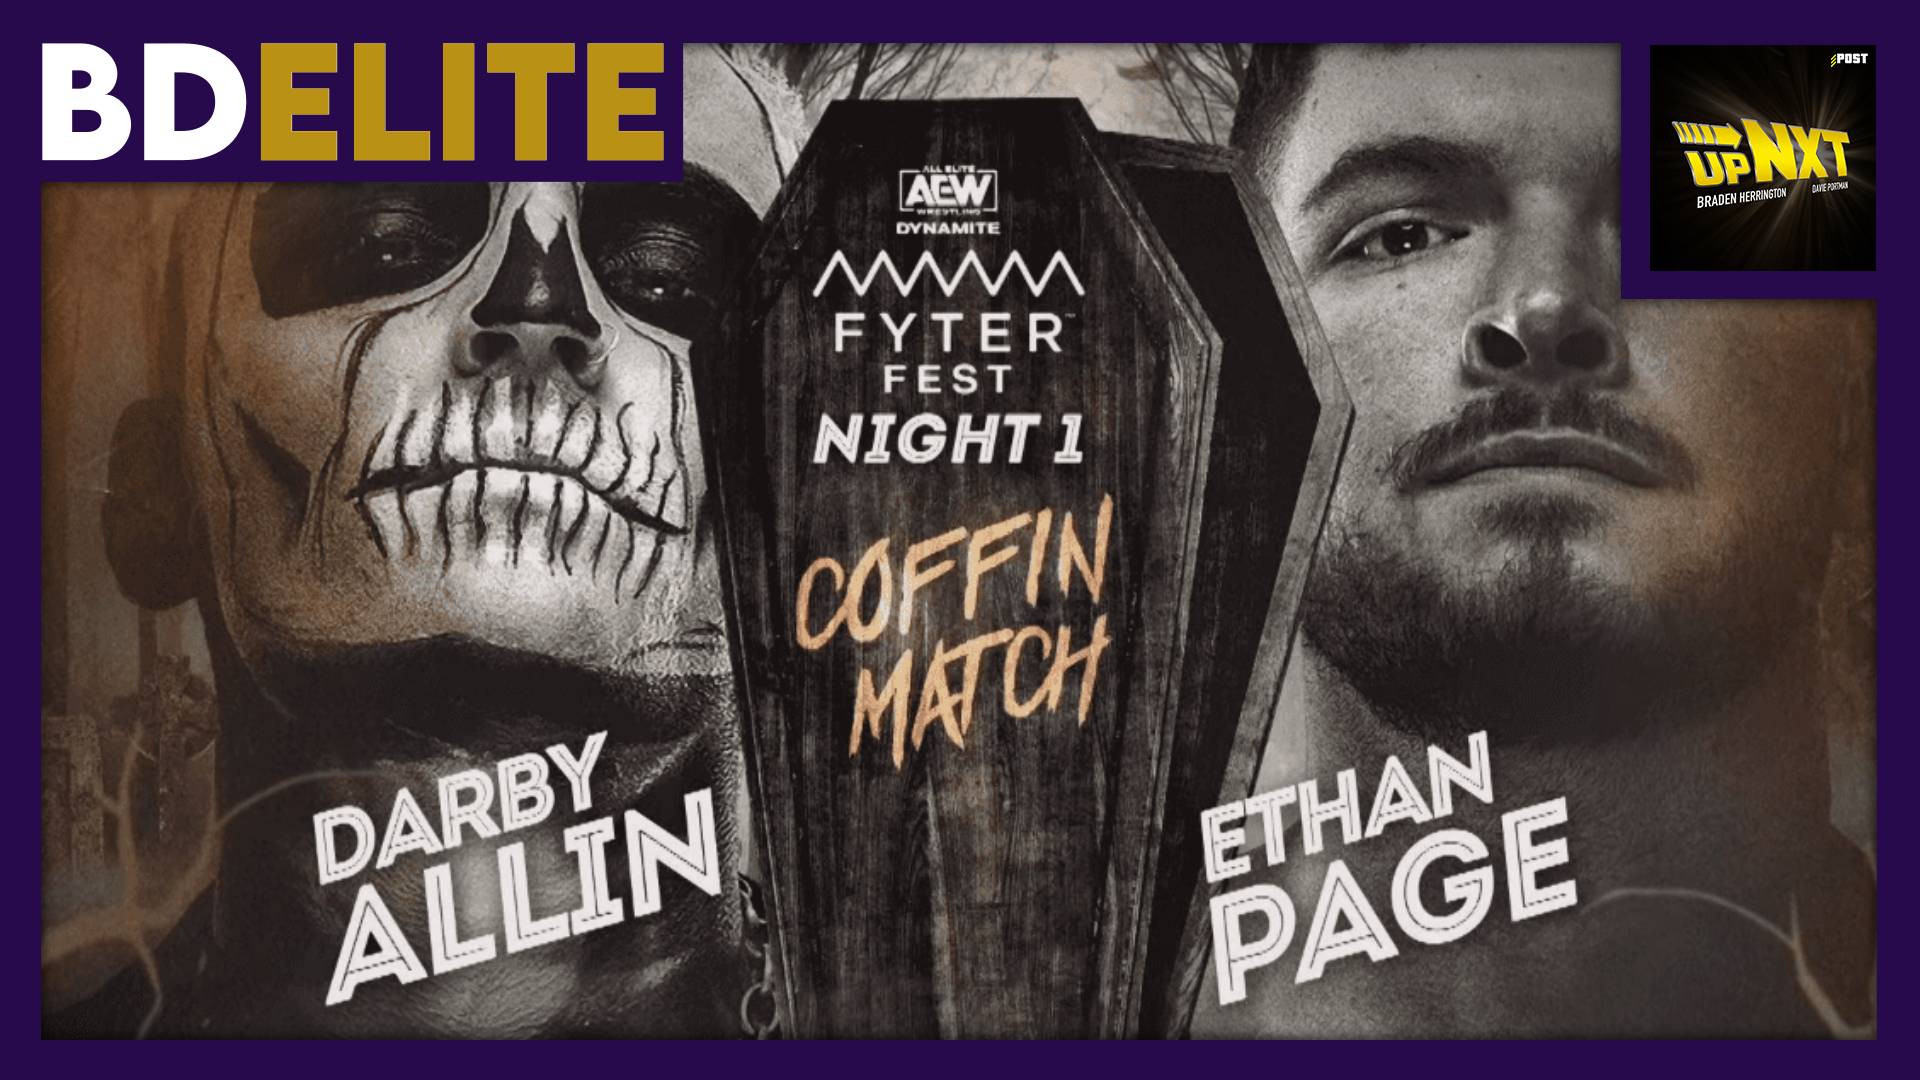 BDElite 7/14/21: Fyter Fest Night 1 / Coffin Match